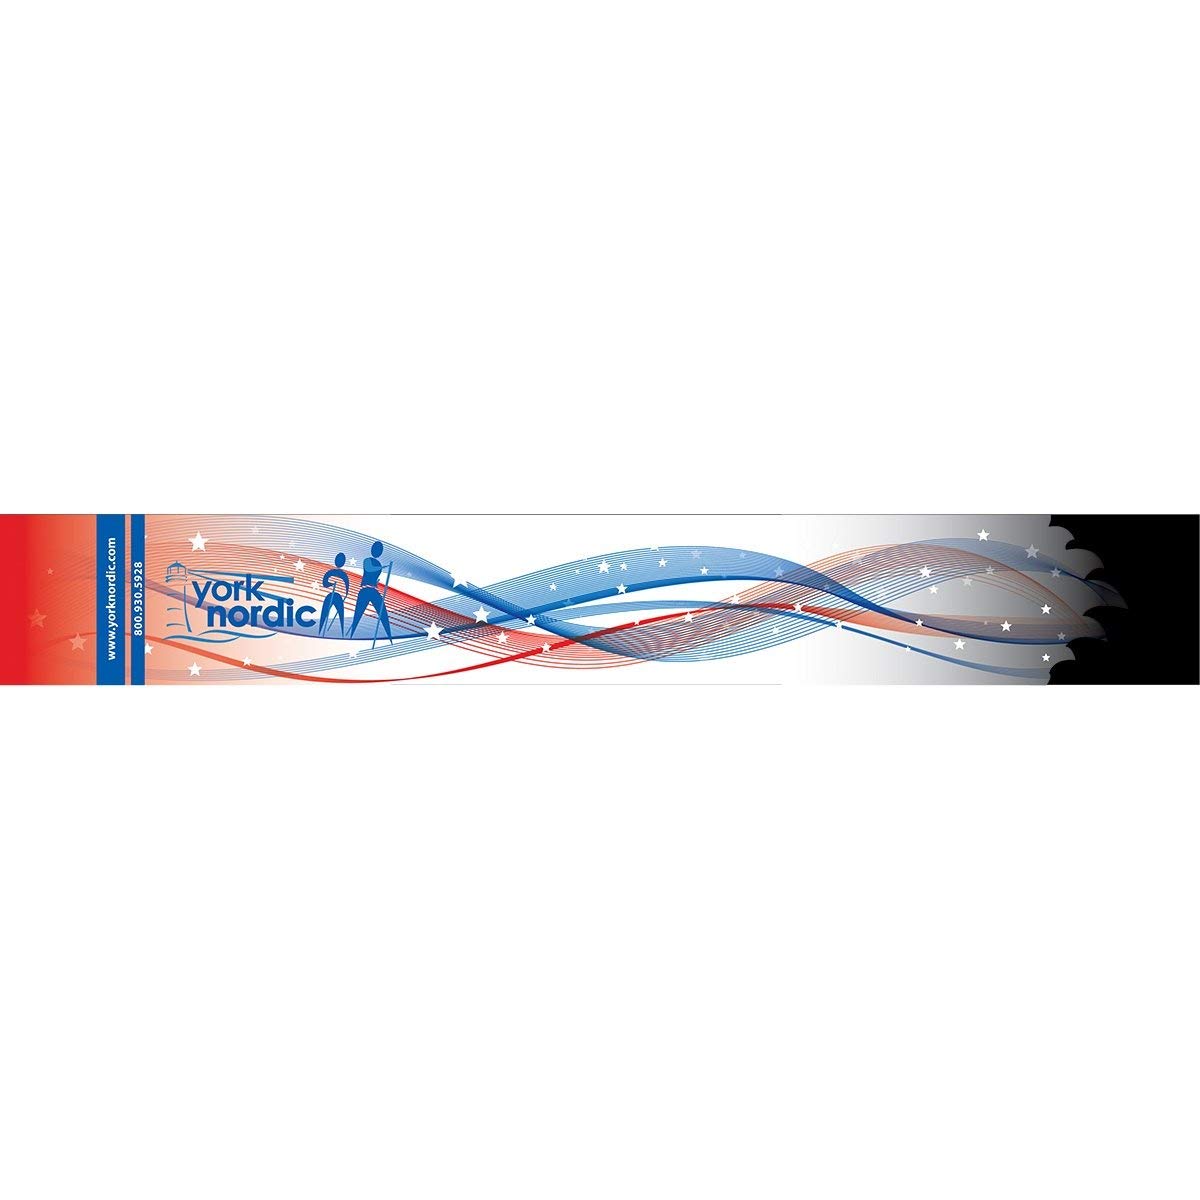 York Nordic Stars & Stripes Walking Poles - Red, White Blue Design - Choice Grips - 2 Poles, Tips & Bag - image 2 of 8